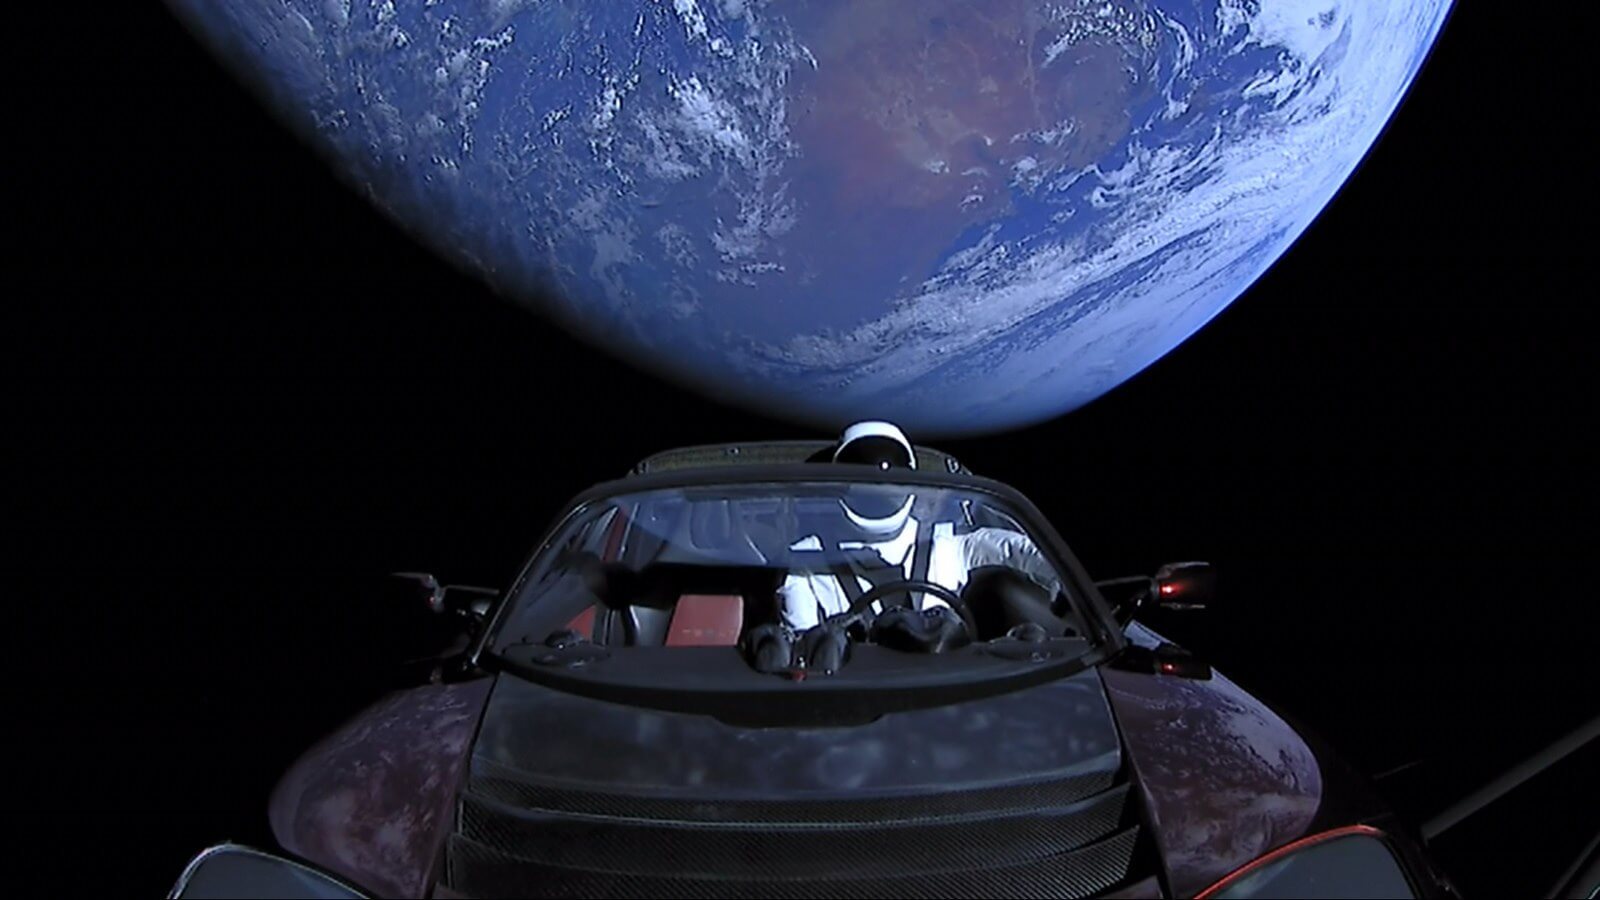 Elon Musk's Tesla Roadster just floated past Mars